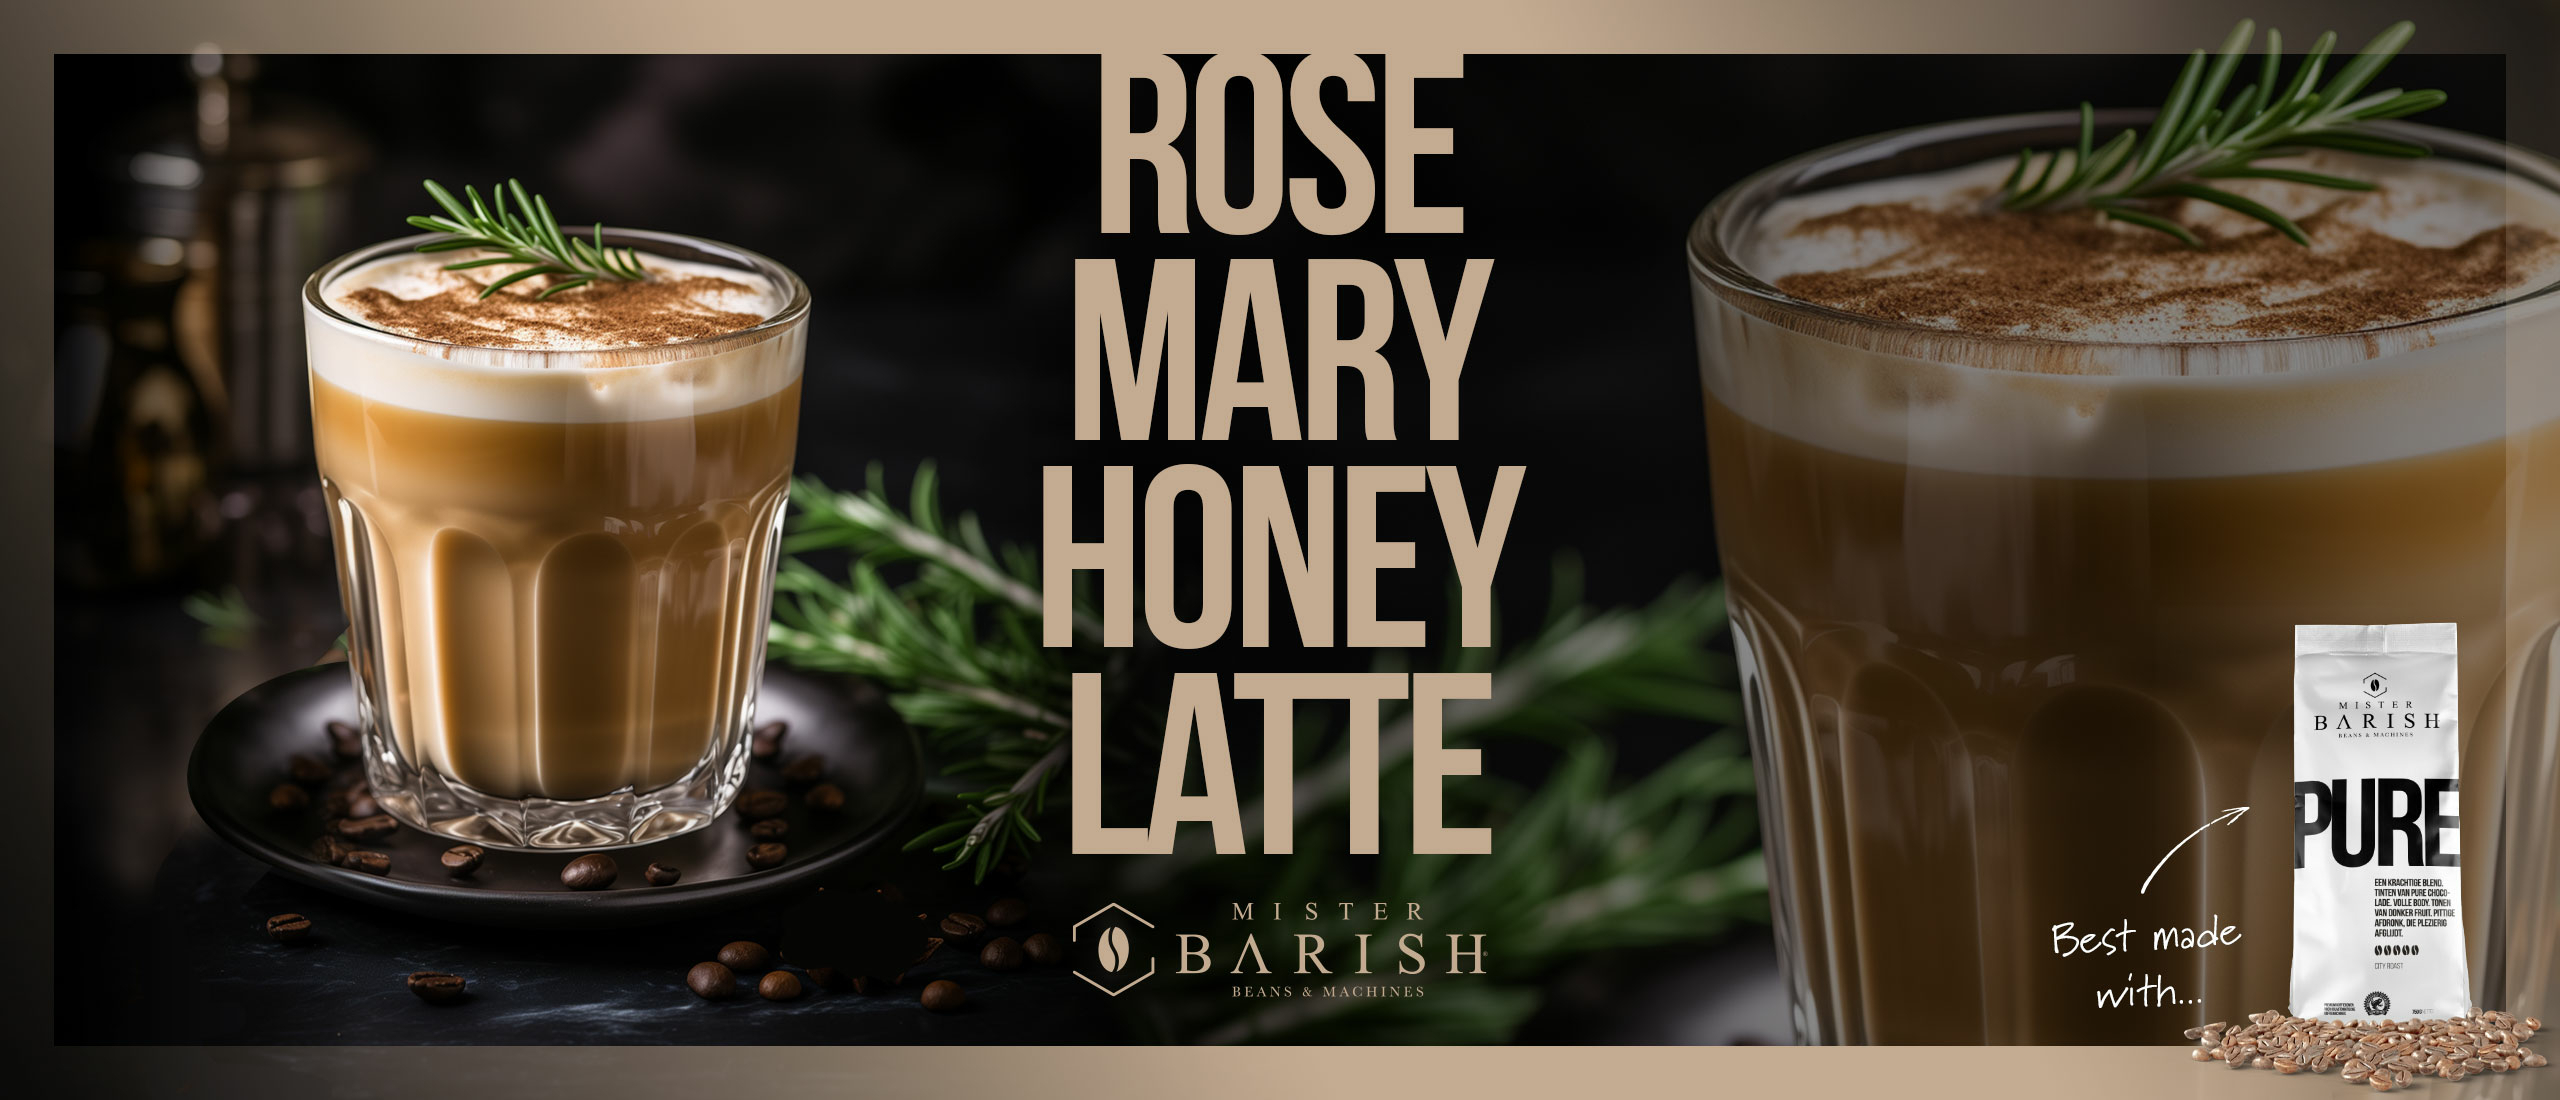 Mister Barish koffierecept rozemarijn honing latte